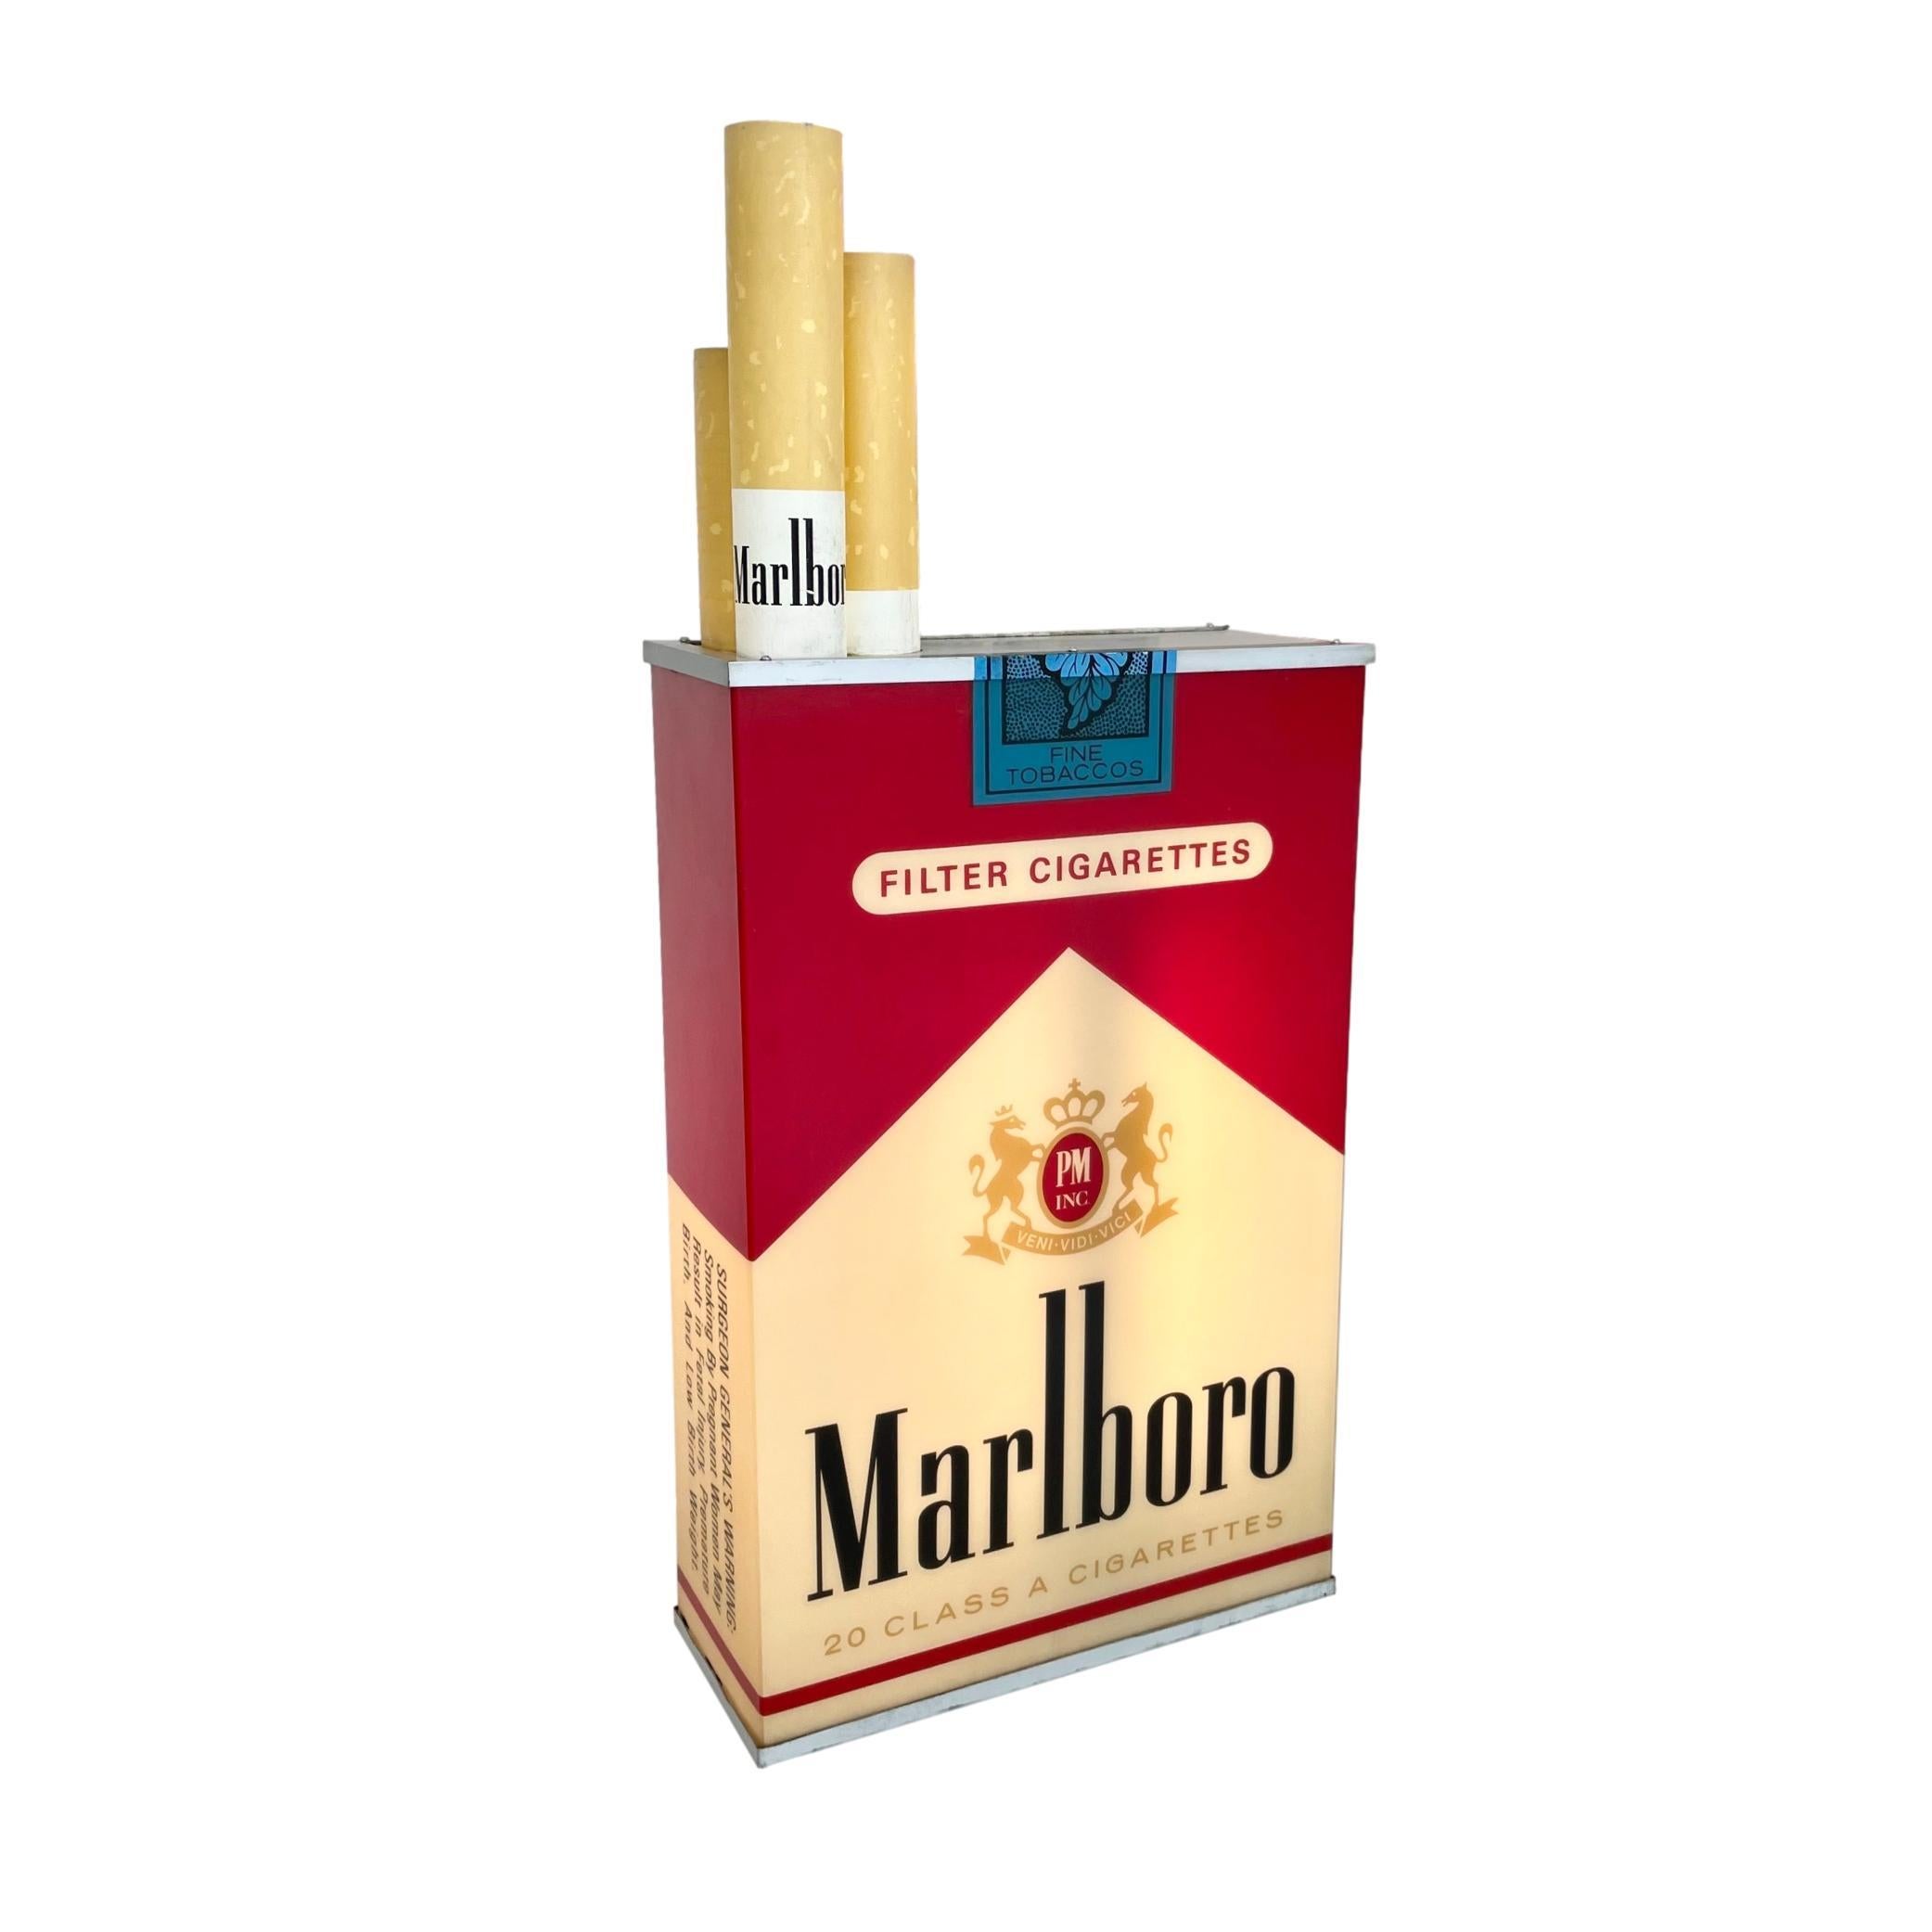 Massive Vintage Marlboro Light Up Cigarette Pack At 1stdibs Vintage Marlboro Sign Giant